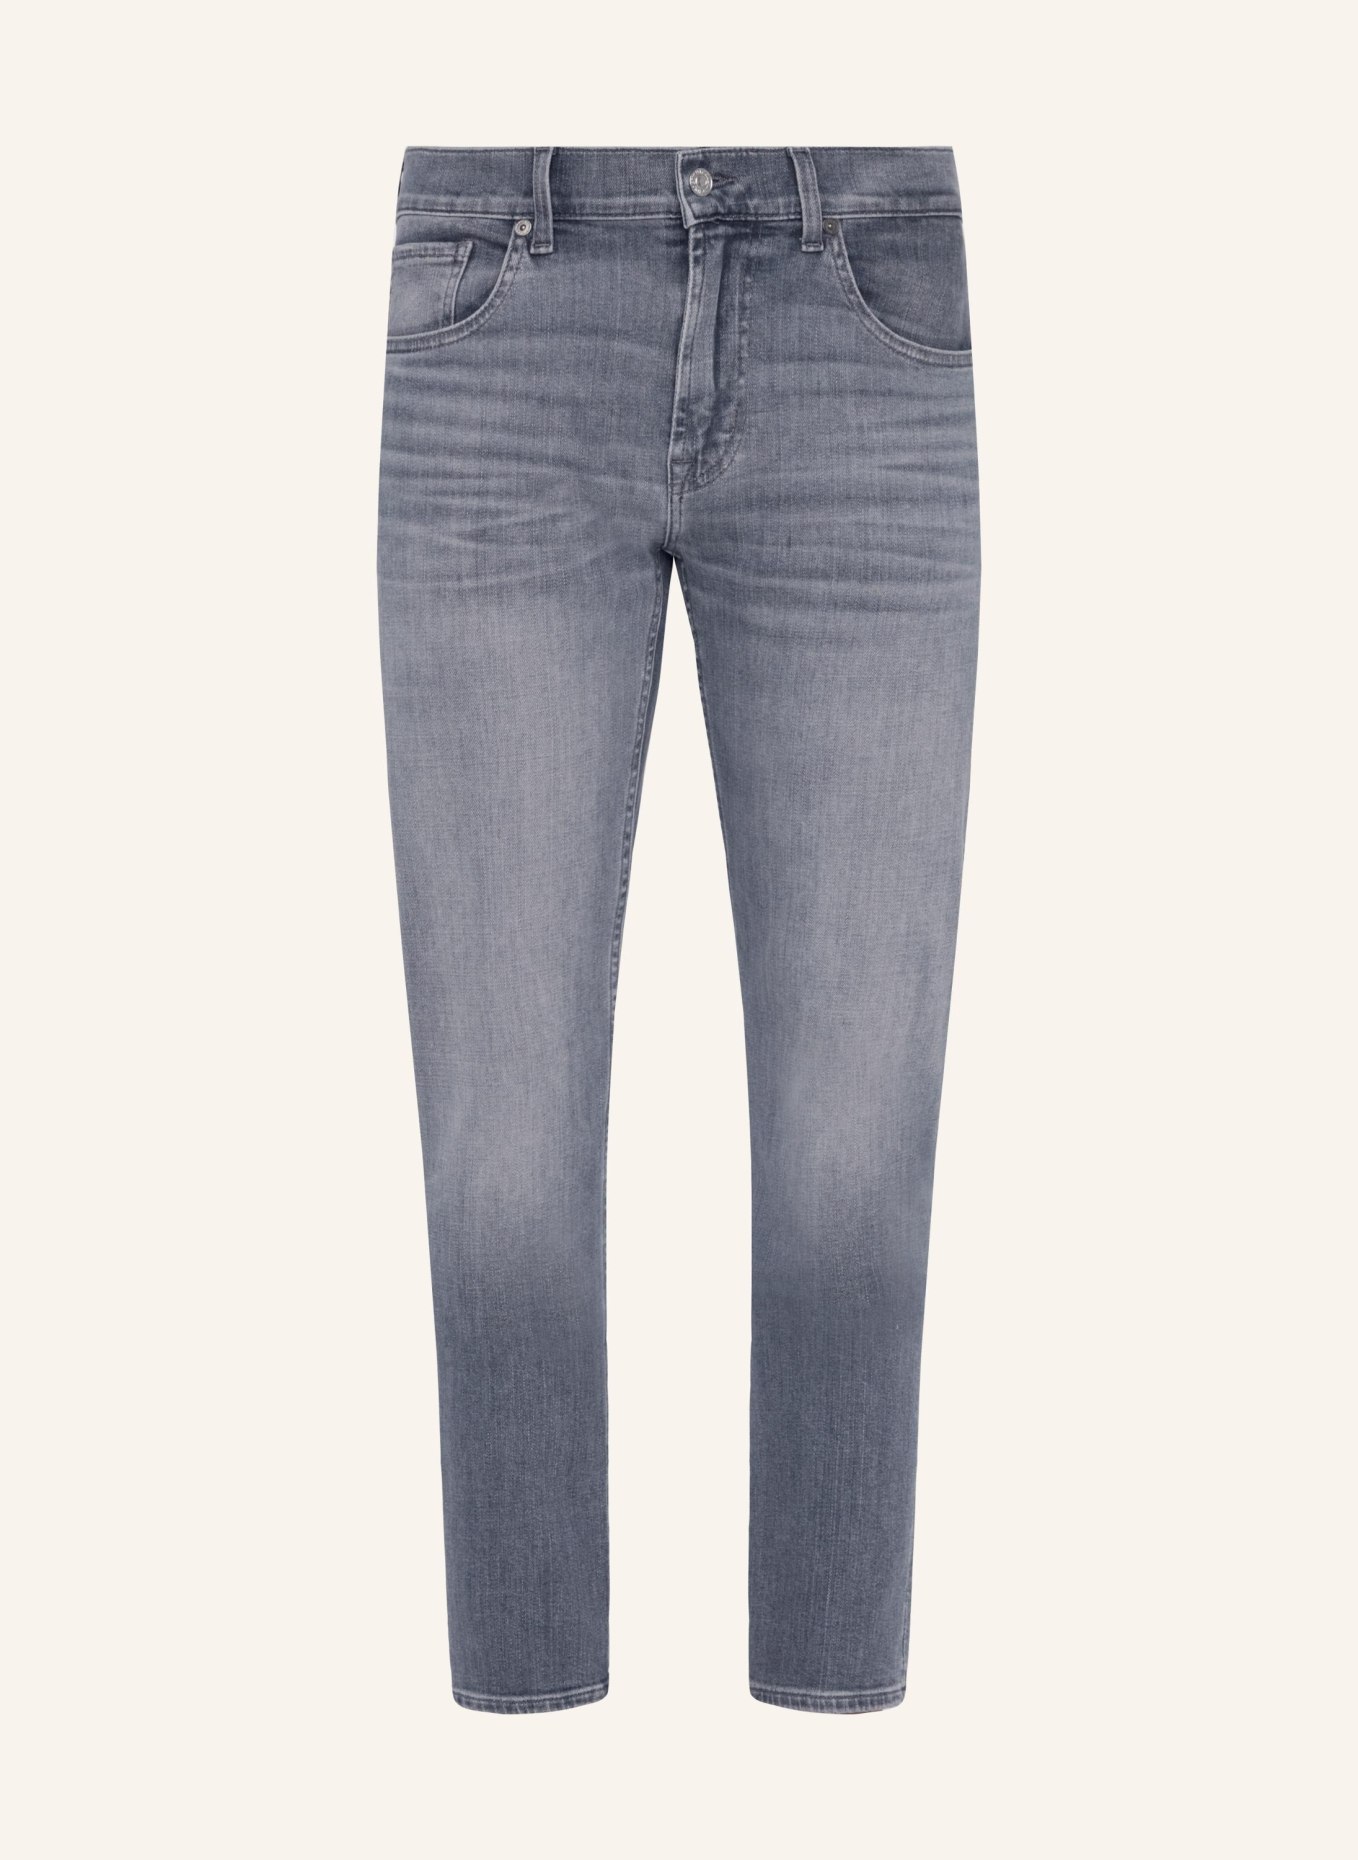 7 for all mankind Jeans SLIMMY TAPERED Slim fit, Farbe: GRAU (Bild 1)